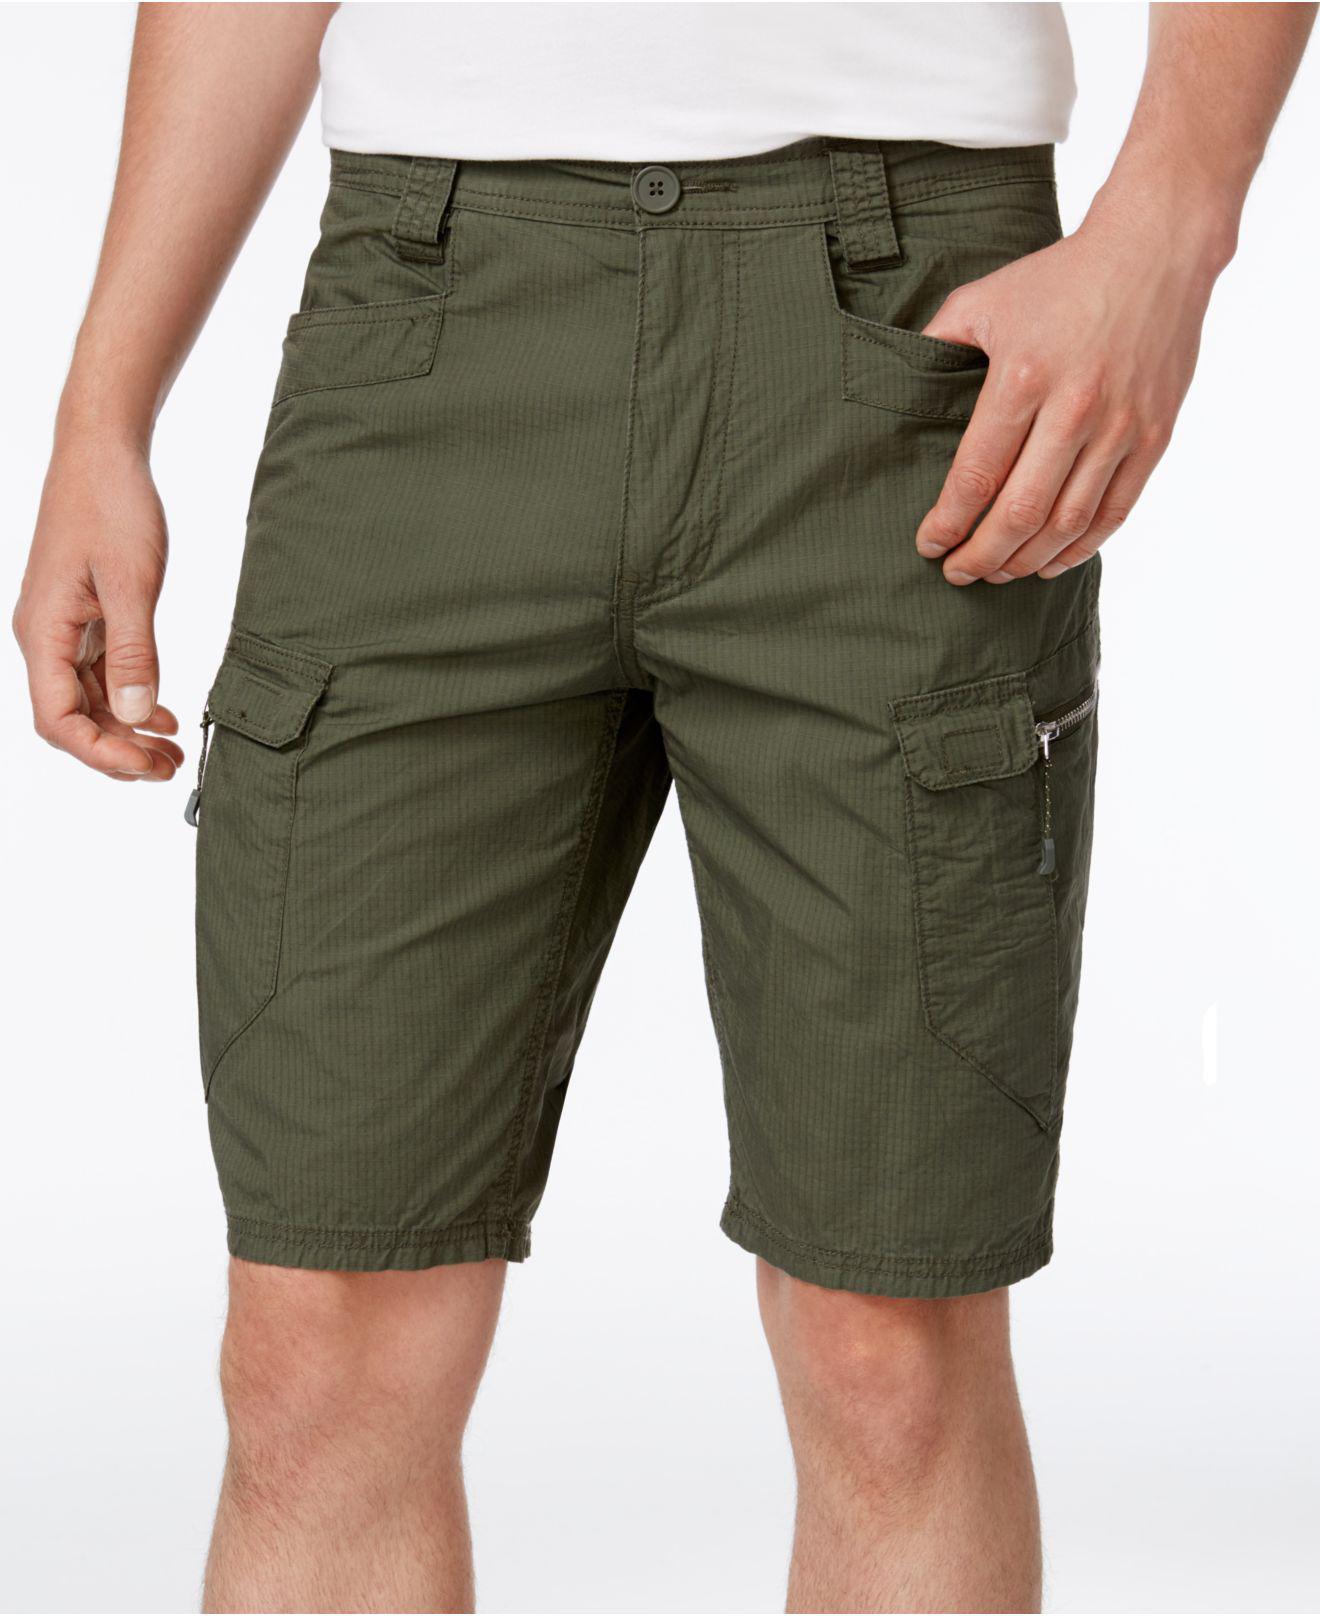 armani cargo shorts - 62% OFF 